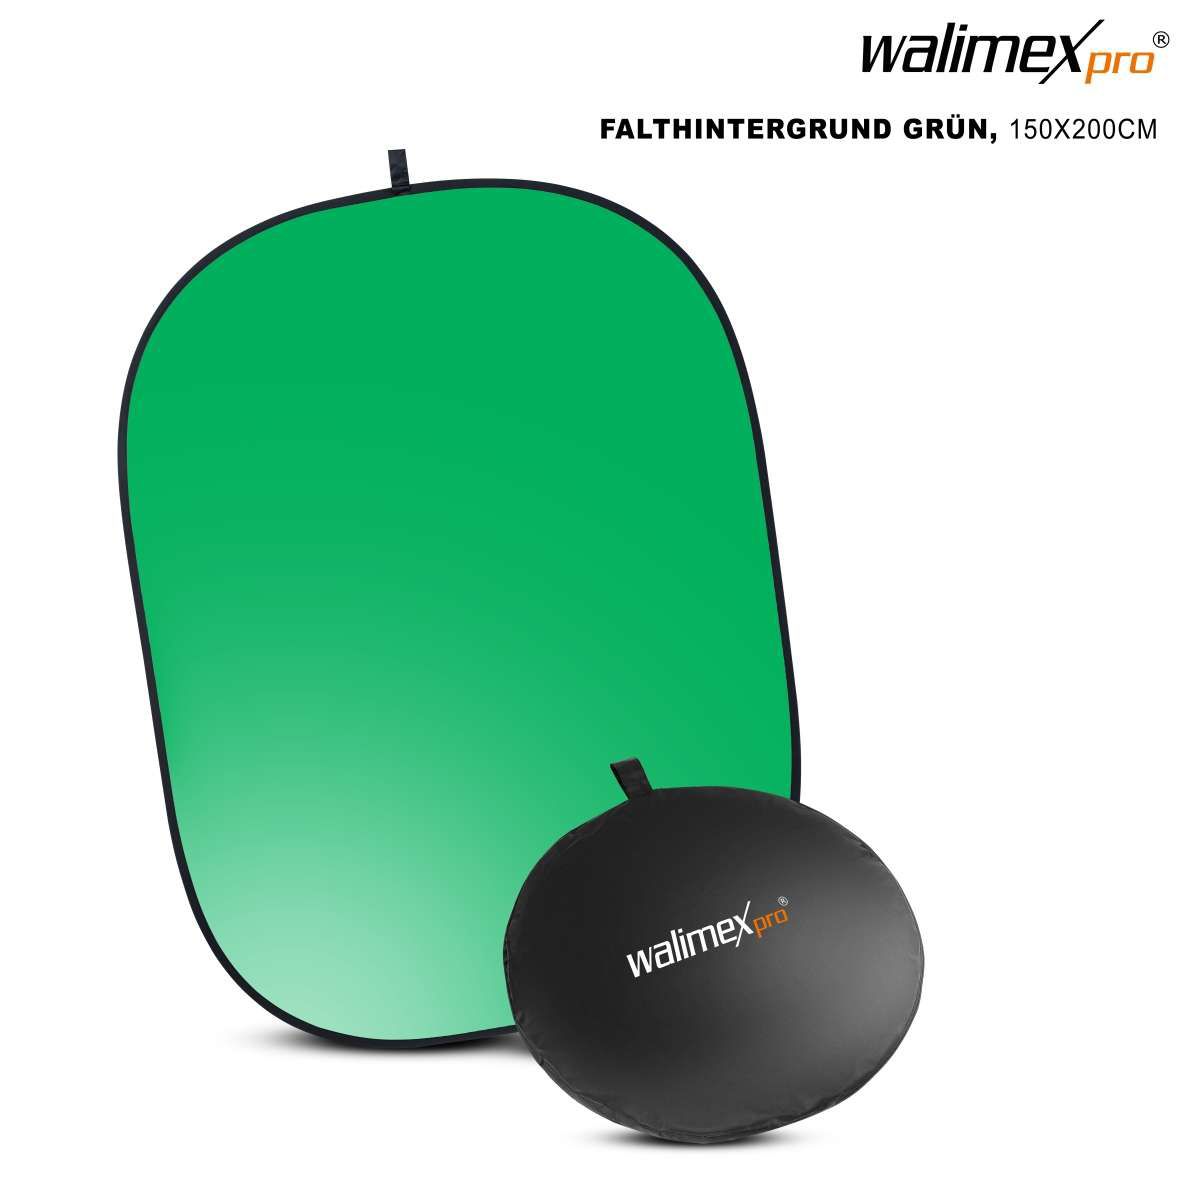 Walimex pro Falthintergrund grün, 150x200cm